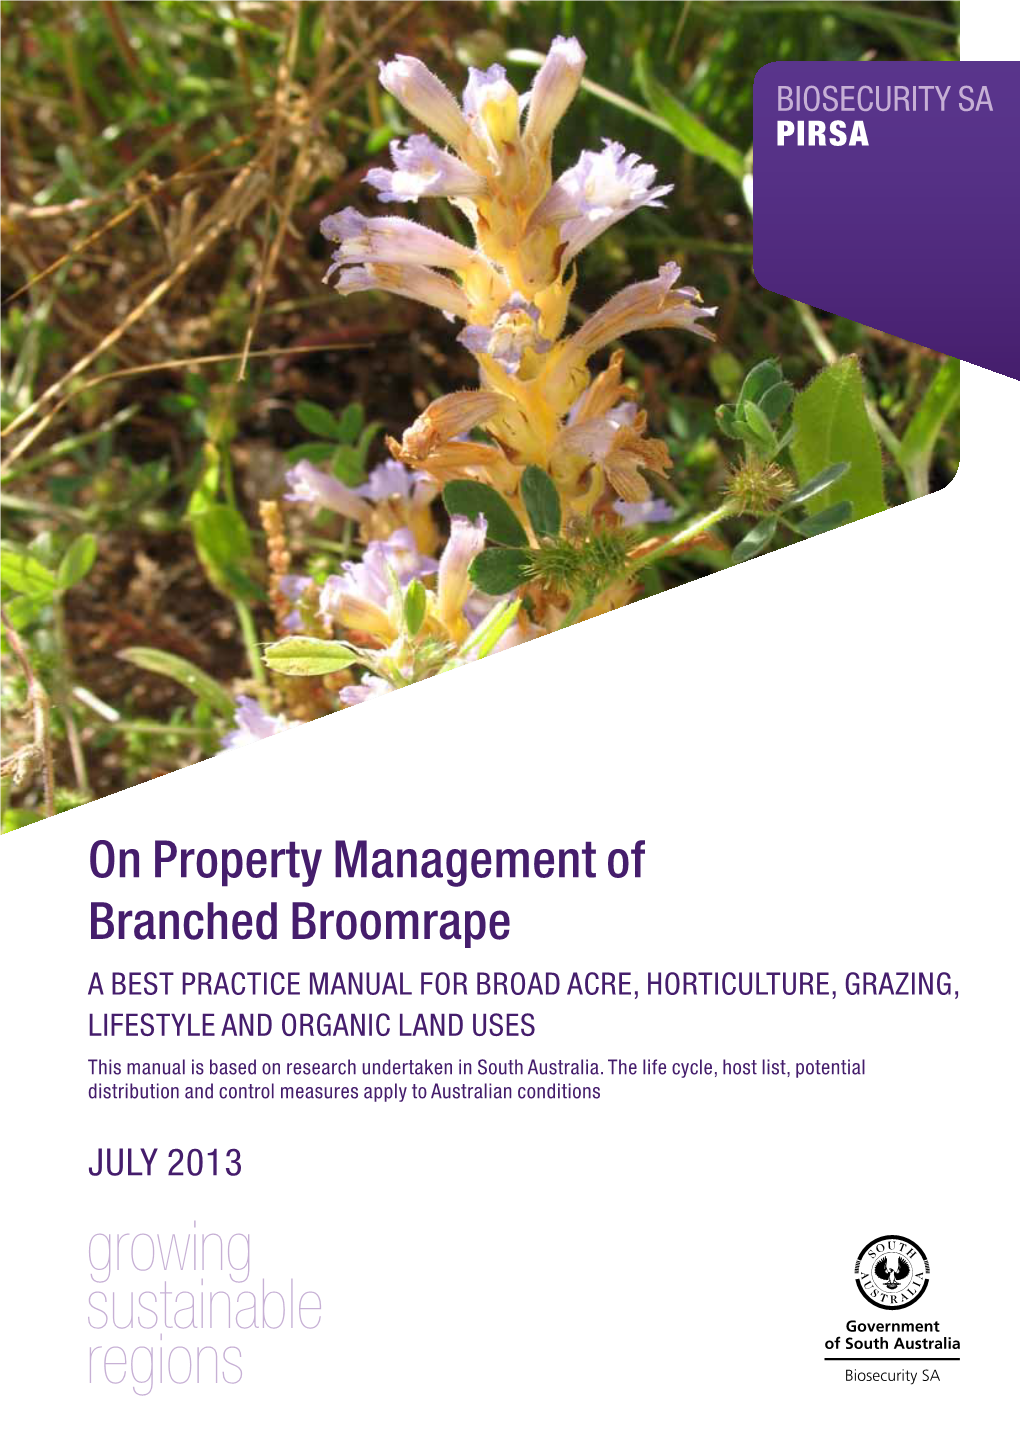 On Property Management of Branched Broomrape